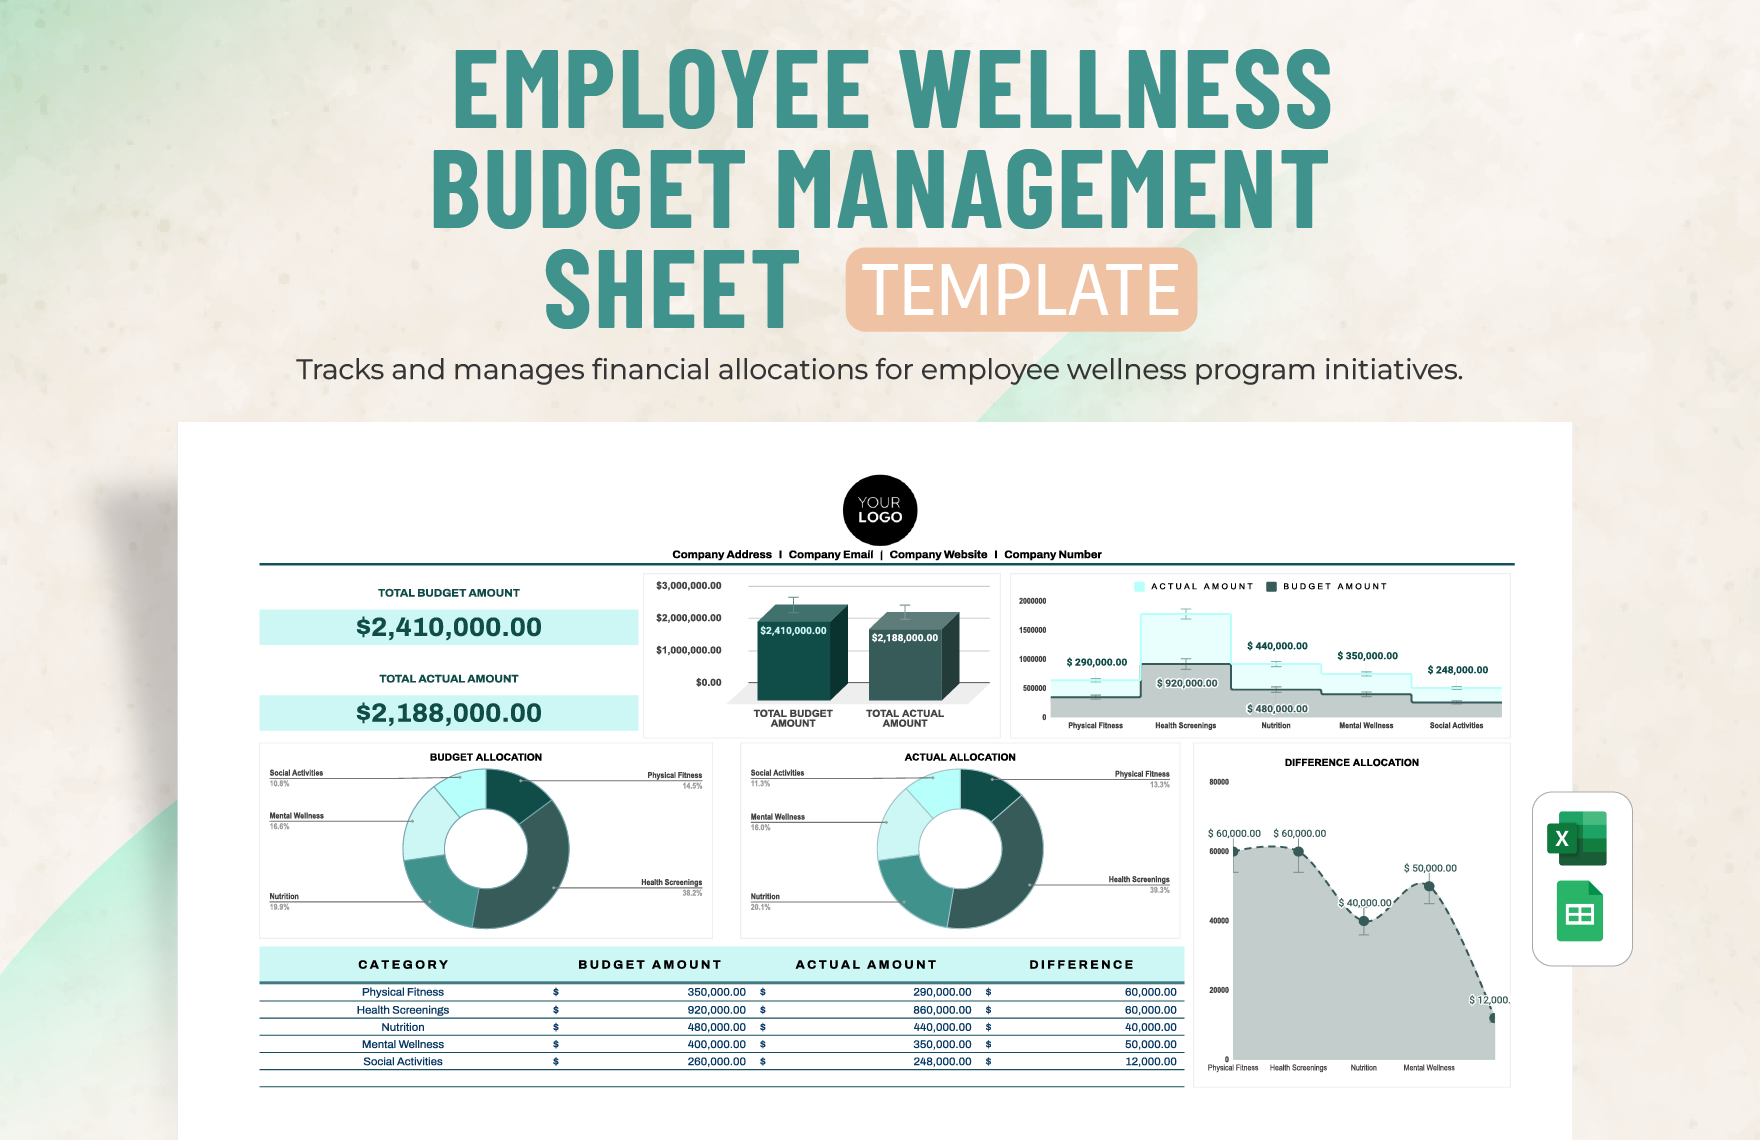 Employee Wellness Budget Management Sheet Template in Excel, Google Sheets